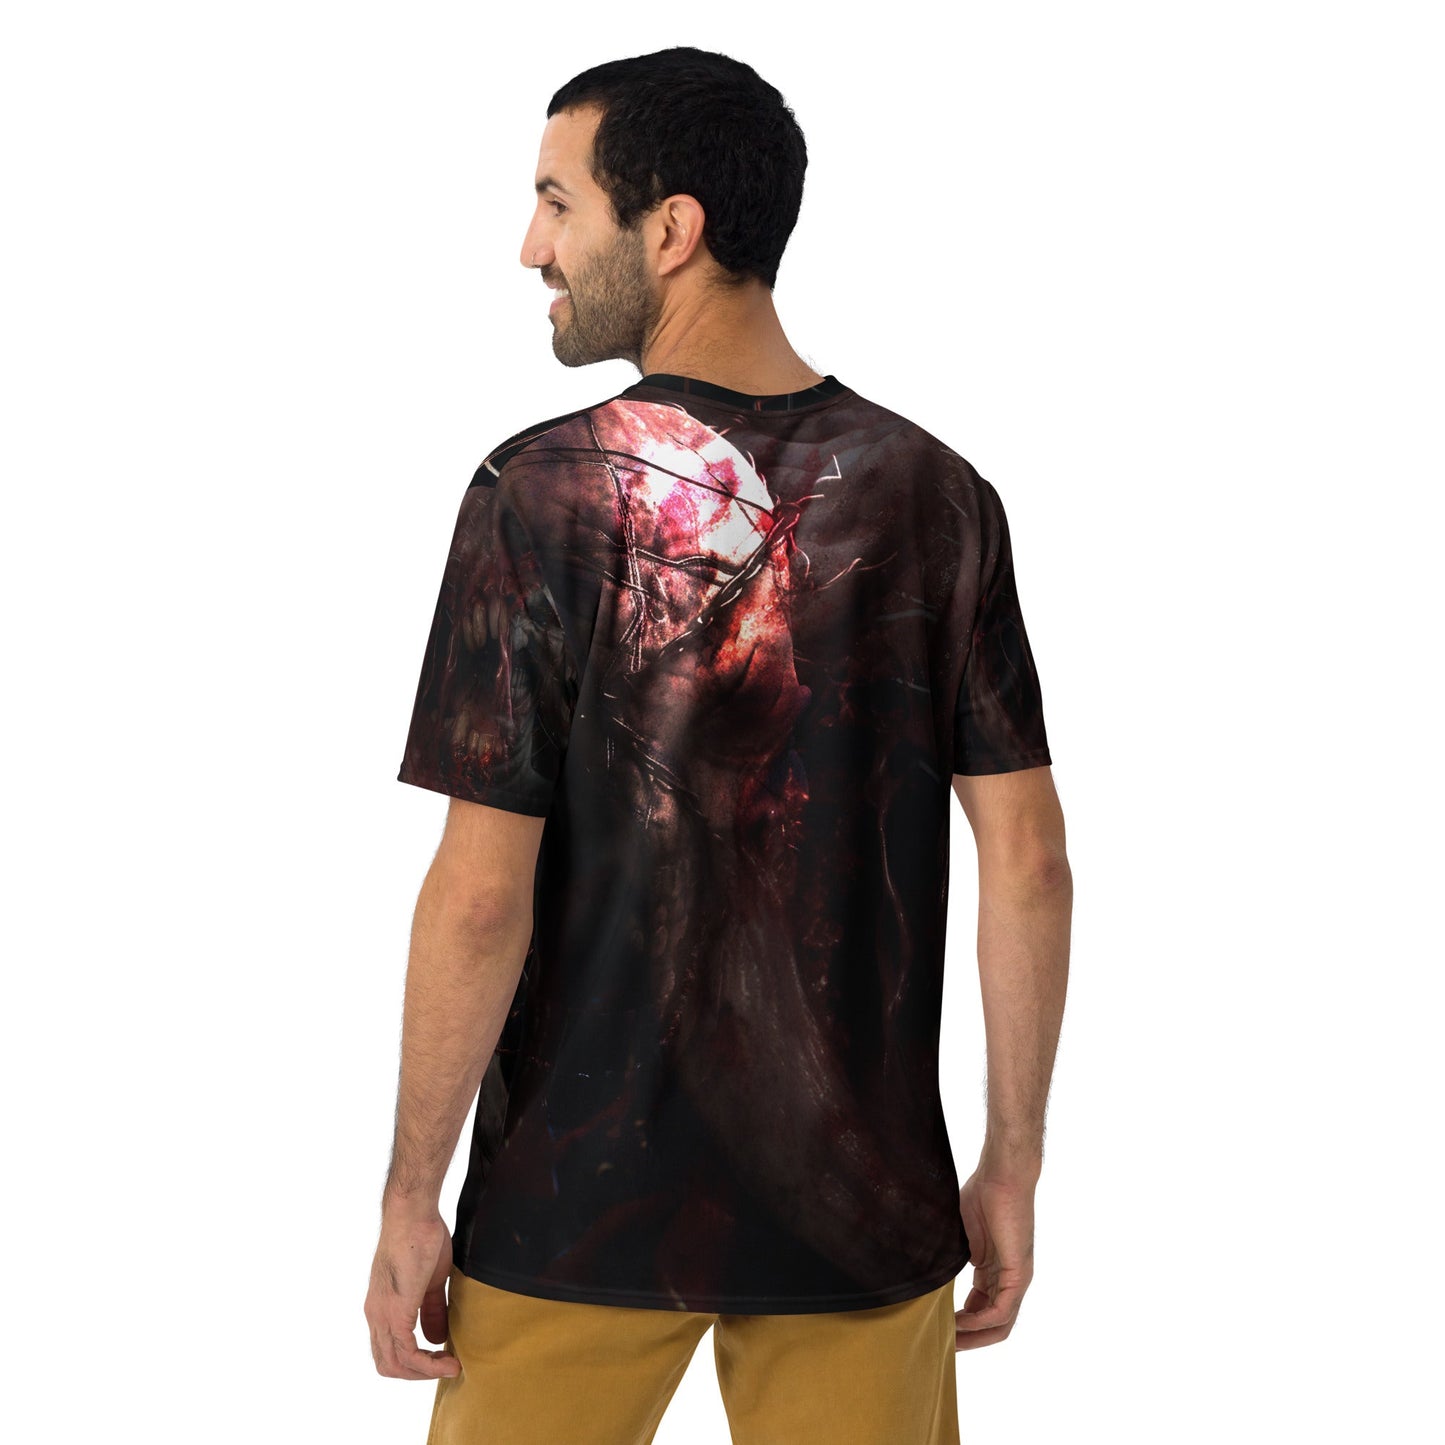 3 Maraheim Madness Men’s t-shirt by Neduz Designs